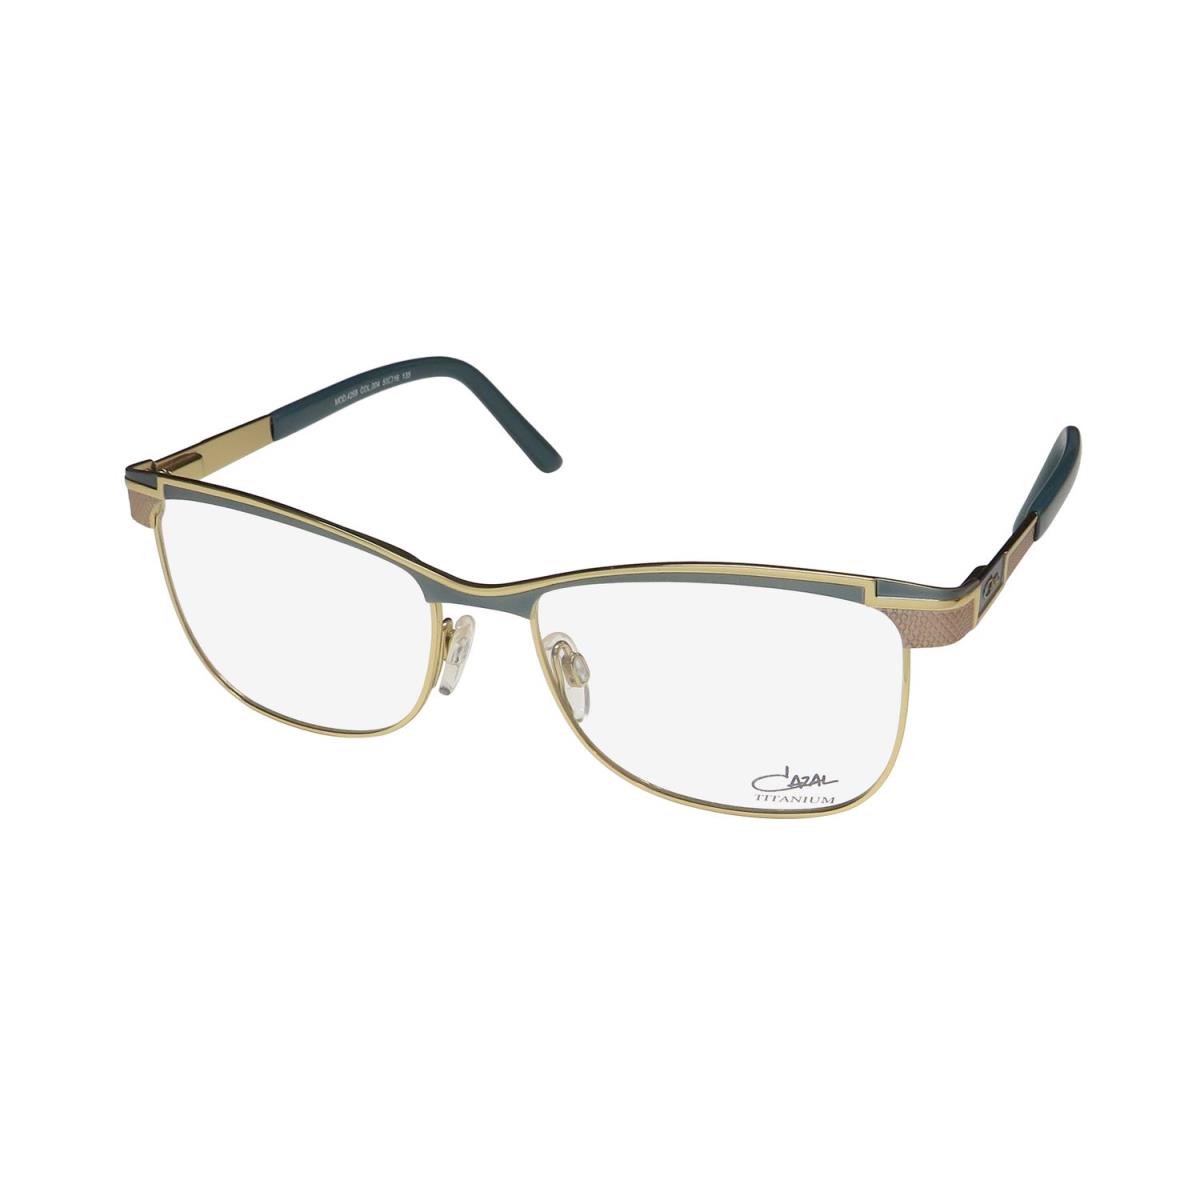 Cazal 4268 Cat Eye Titanium Metal Full-rim Imported Rare Eyeglass Frame/glasses Mint / Nude / Gold